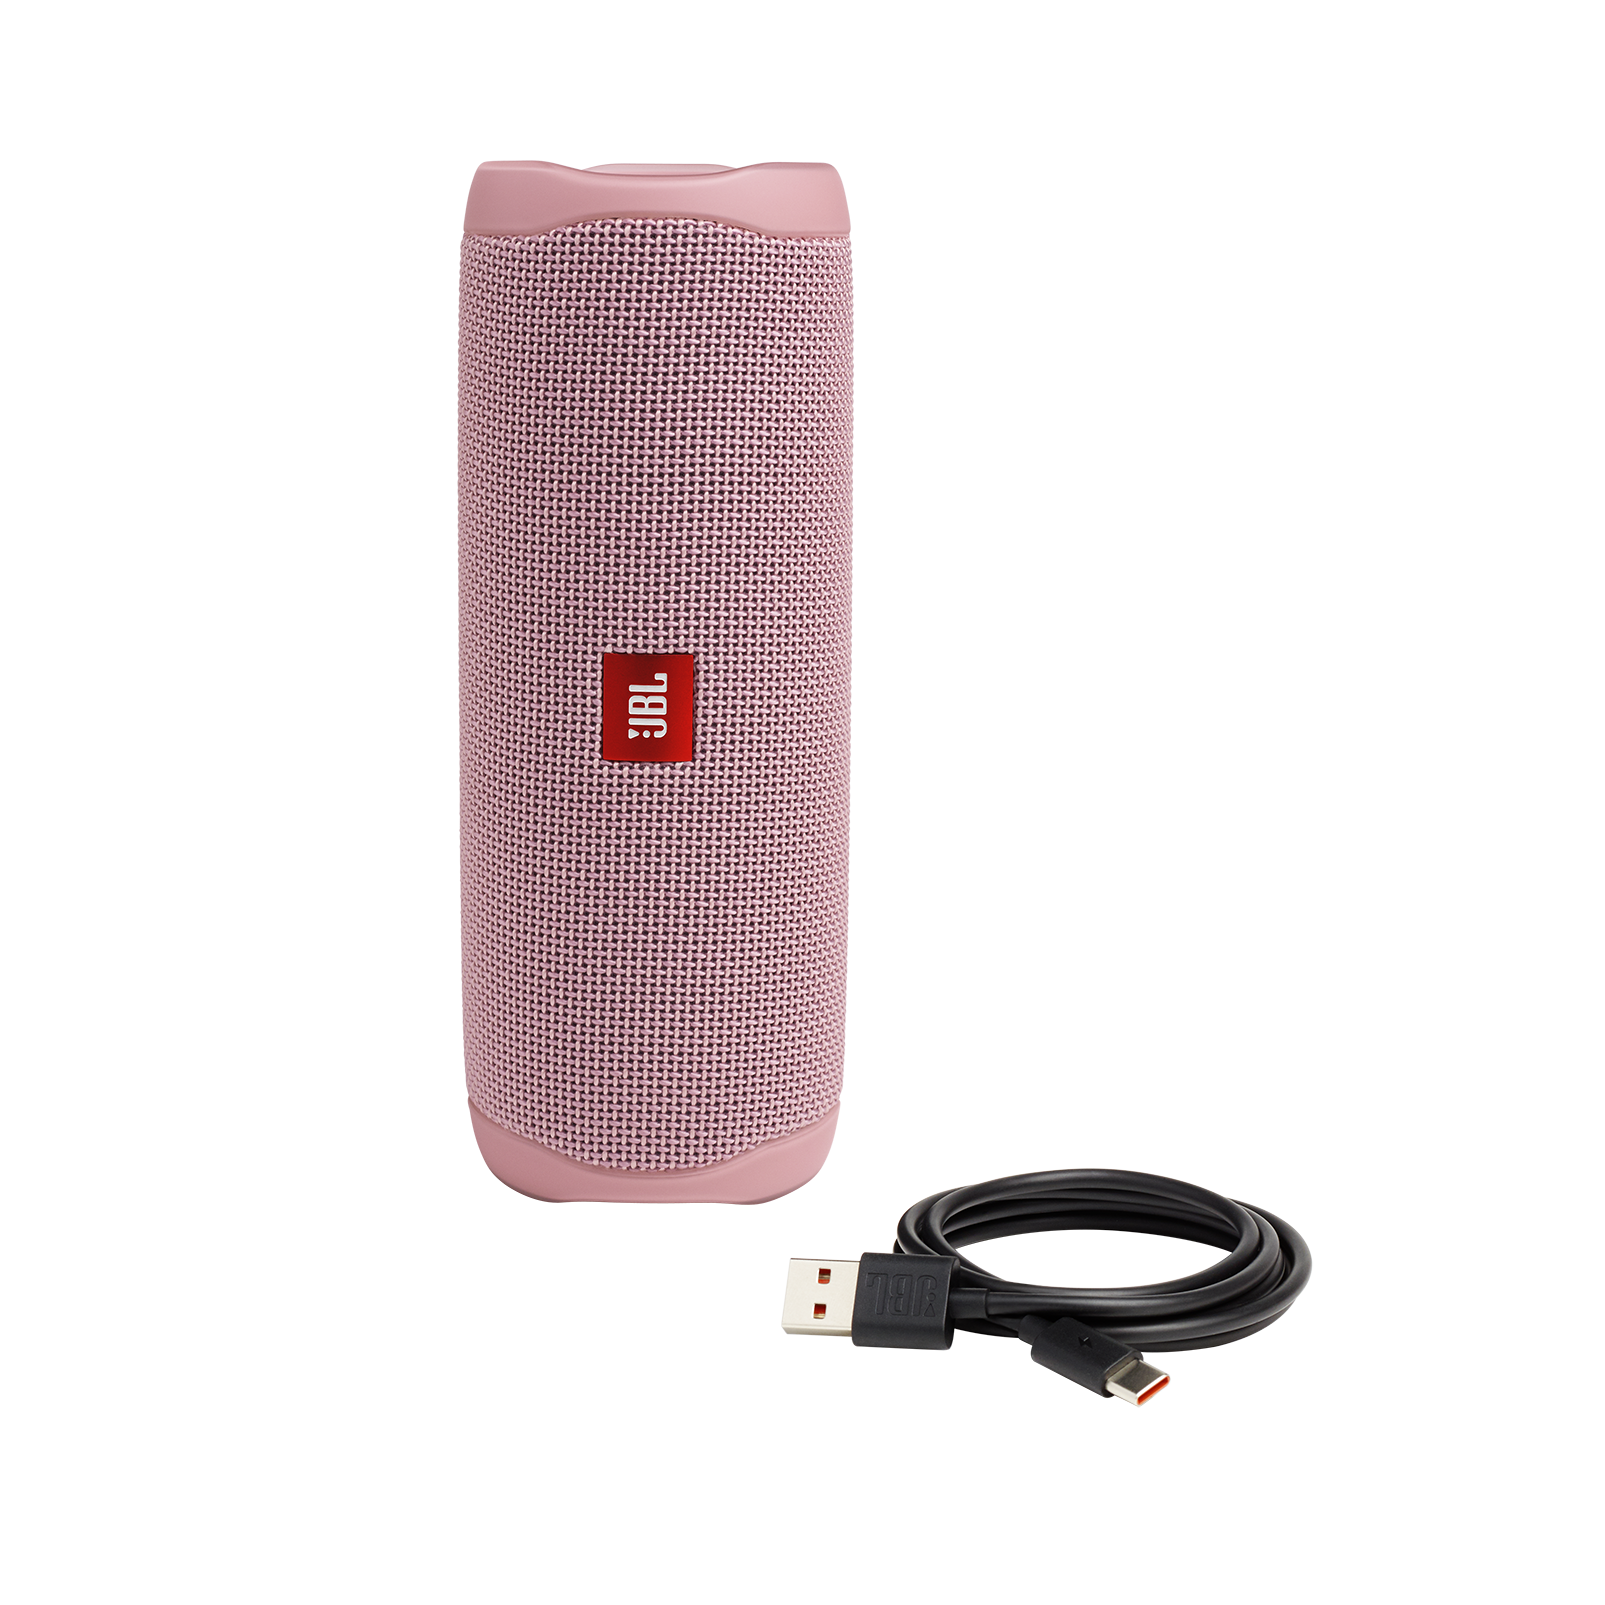 JBL Flip 5 - Pink - Portable Waterproof Speaker - Detailshot 1